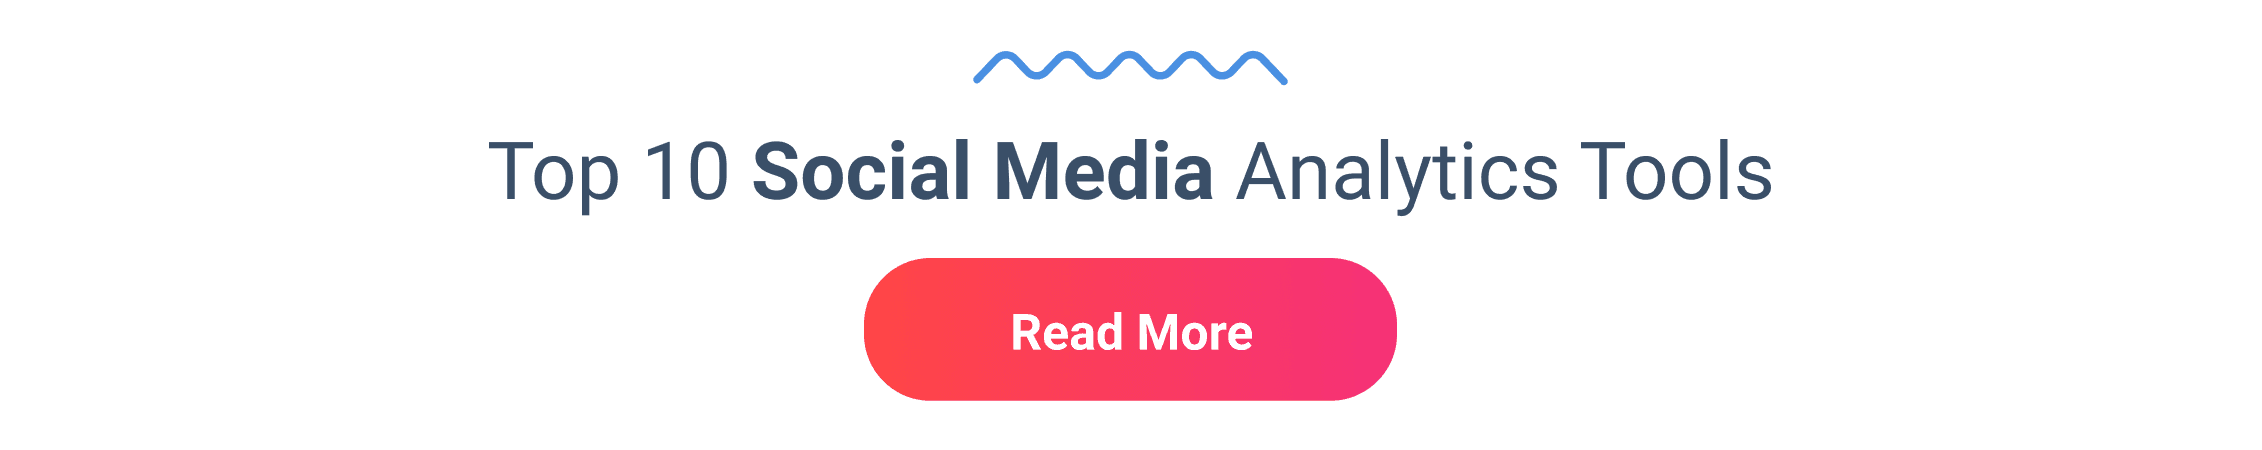 Top 10 social media analytics tools banner